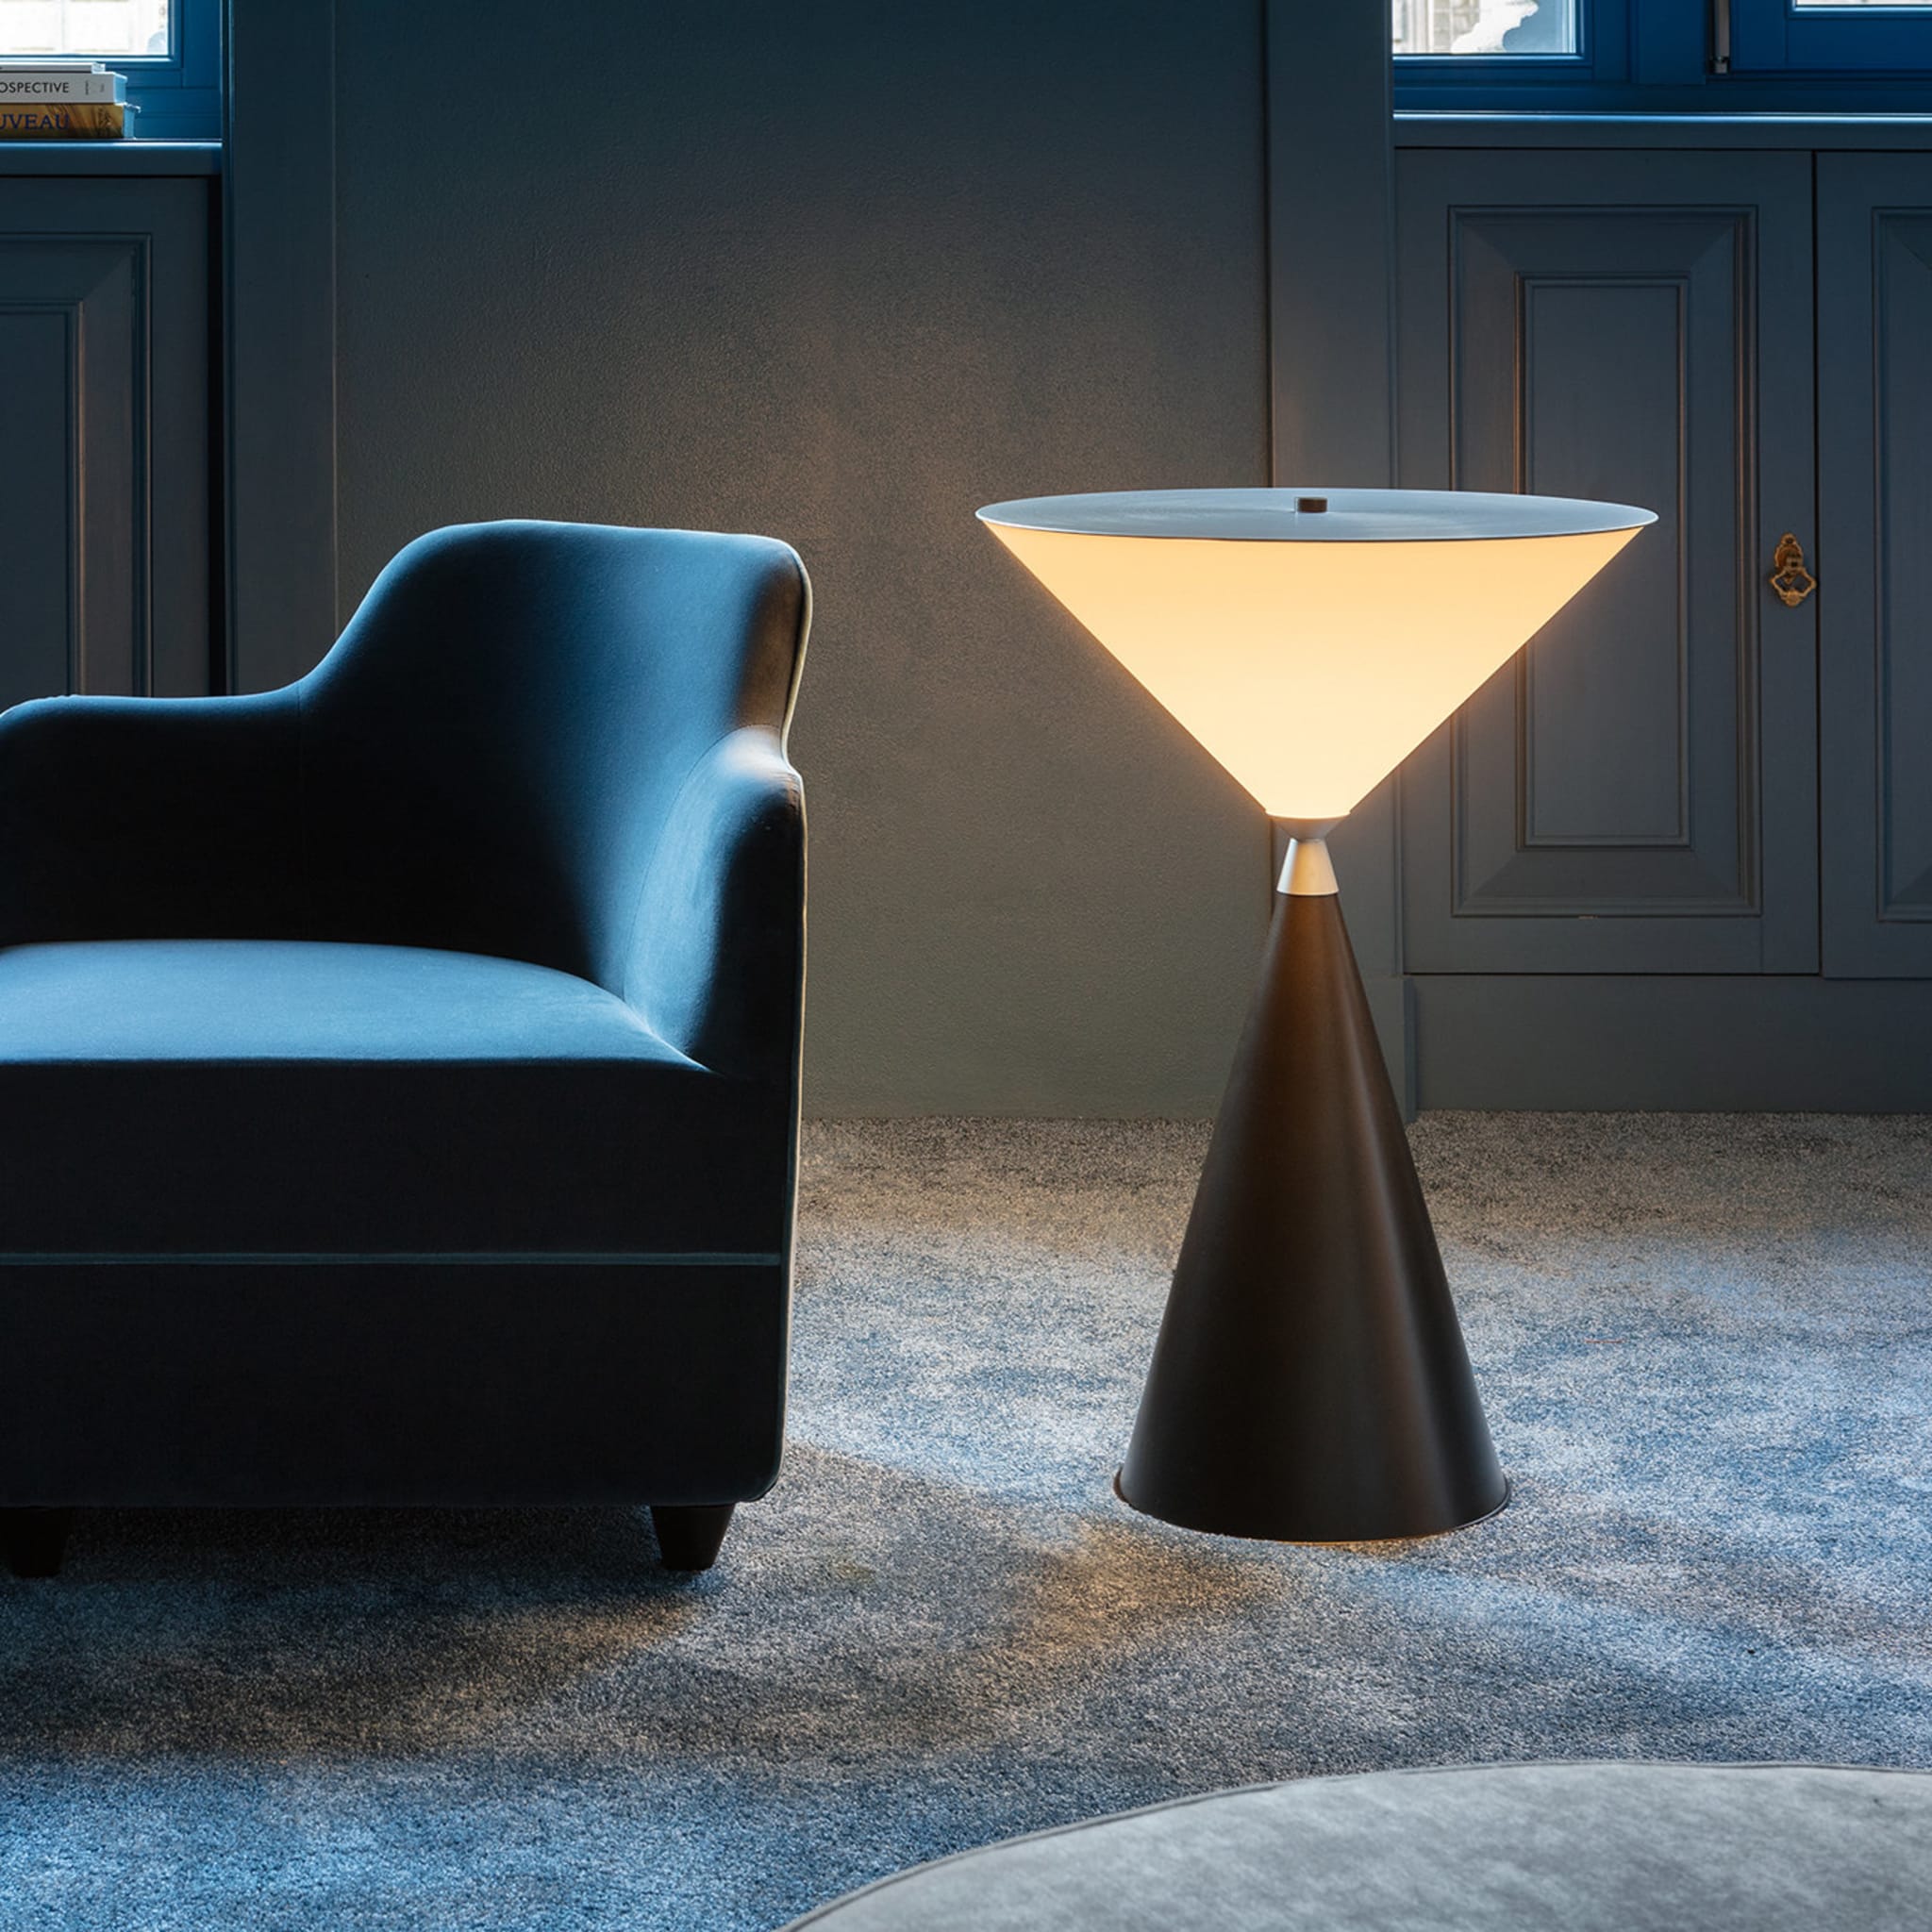 Icones Table Lamp by Lorenza Bozzoli - Alternative view 3